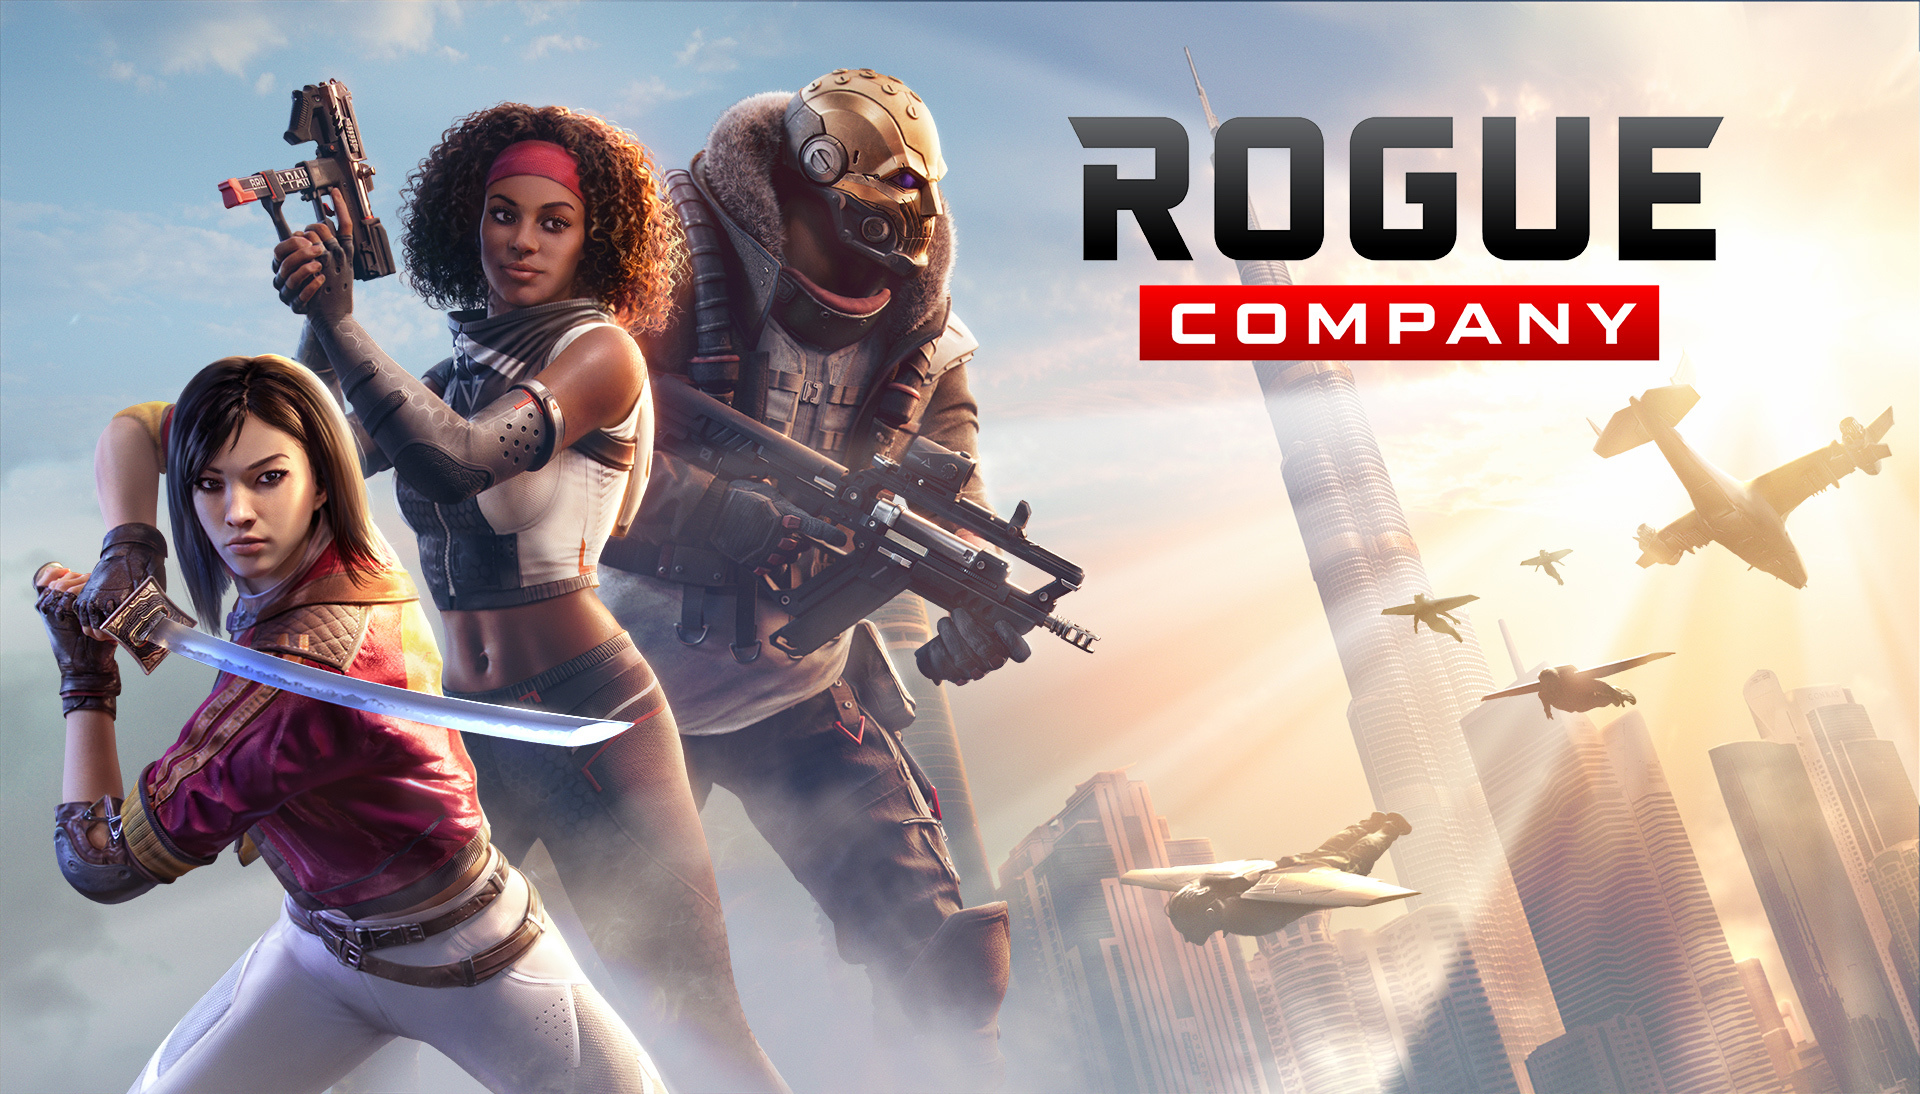 KPMGコンサルティング、
米国ゲーム会社Hi-Rez Studios社の新作
「Rogue Company」の日本市場におけるB to B事業強化を支援